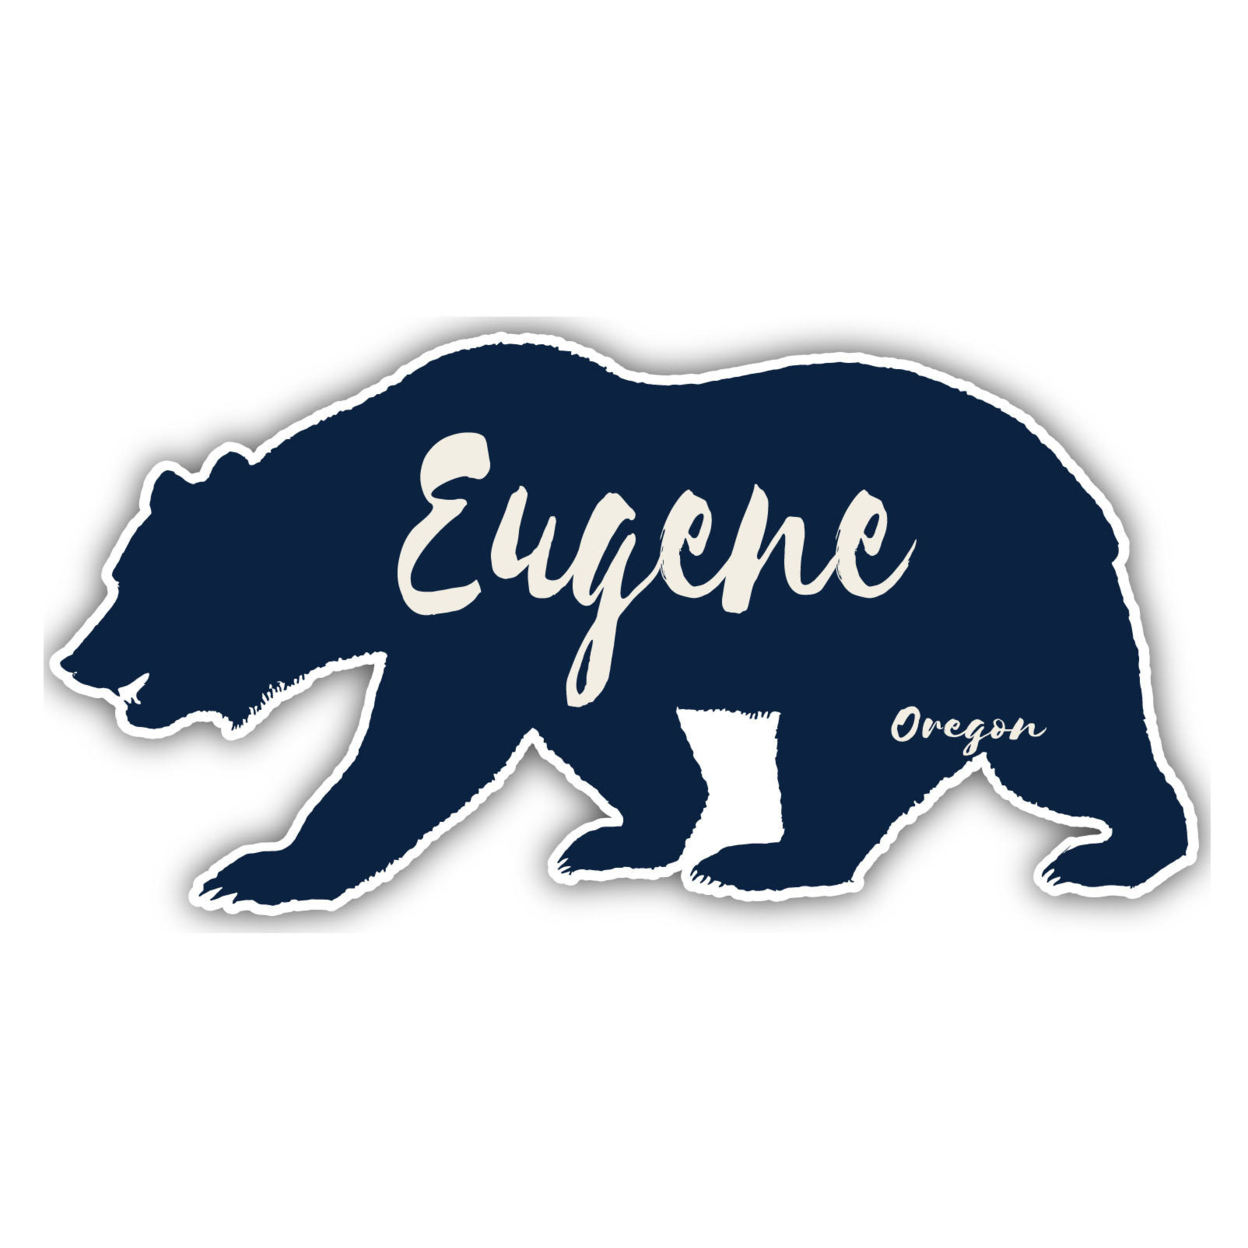 Eugene Oregon Souvenir Decorative Stickers (Choose Theme And Size) - Single Unit, 12-Inch, Bear